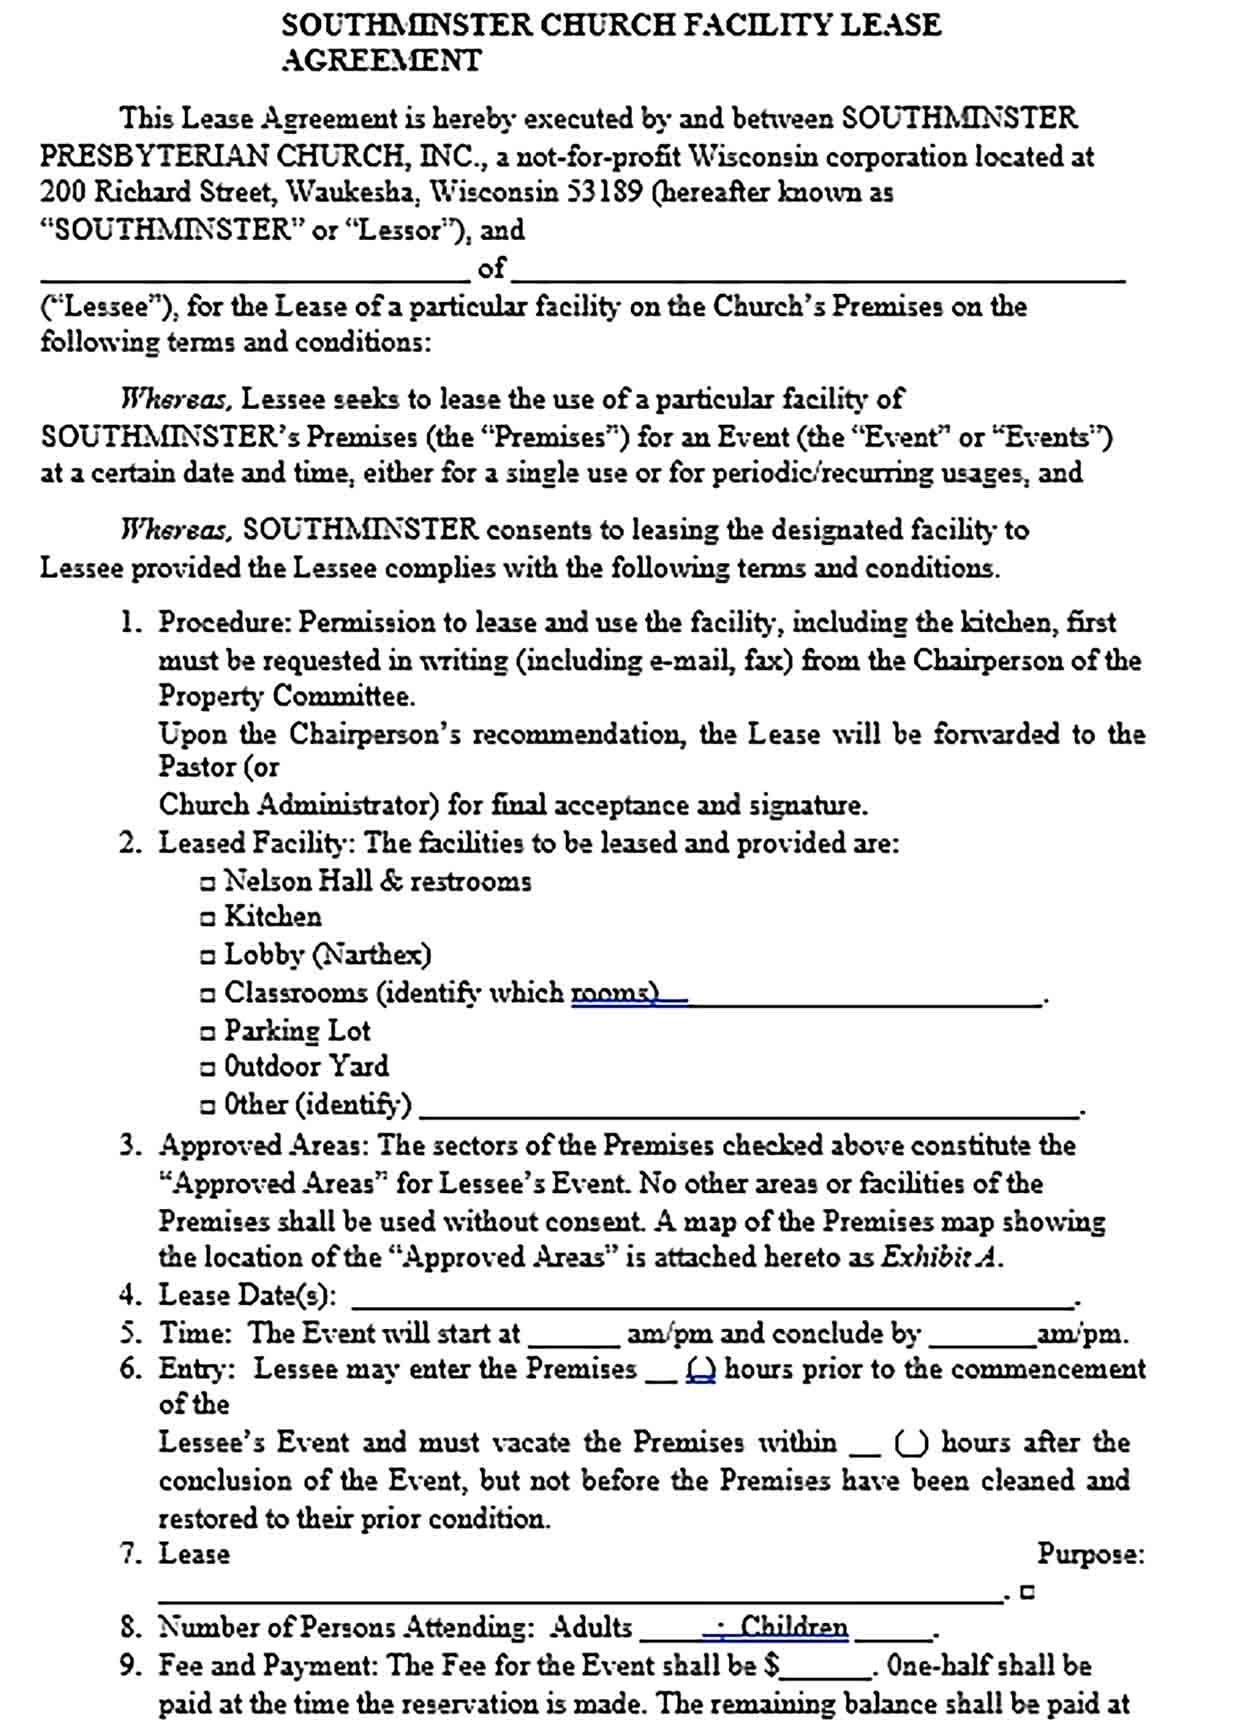 Sample Church Lease Agreement 001